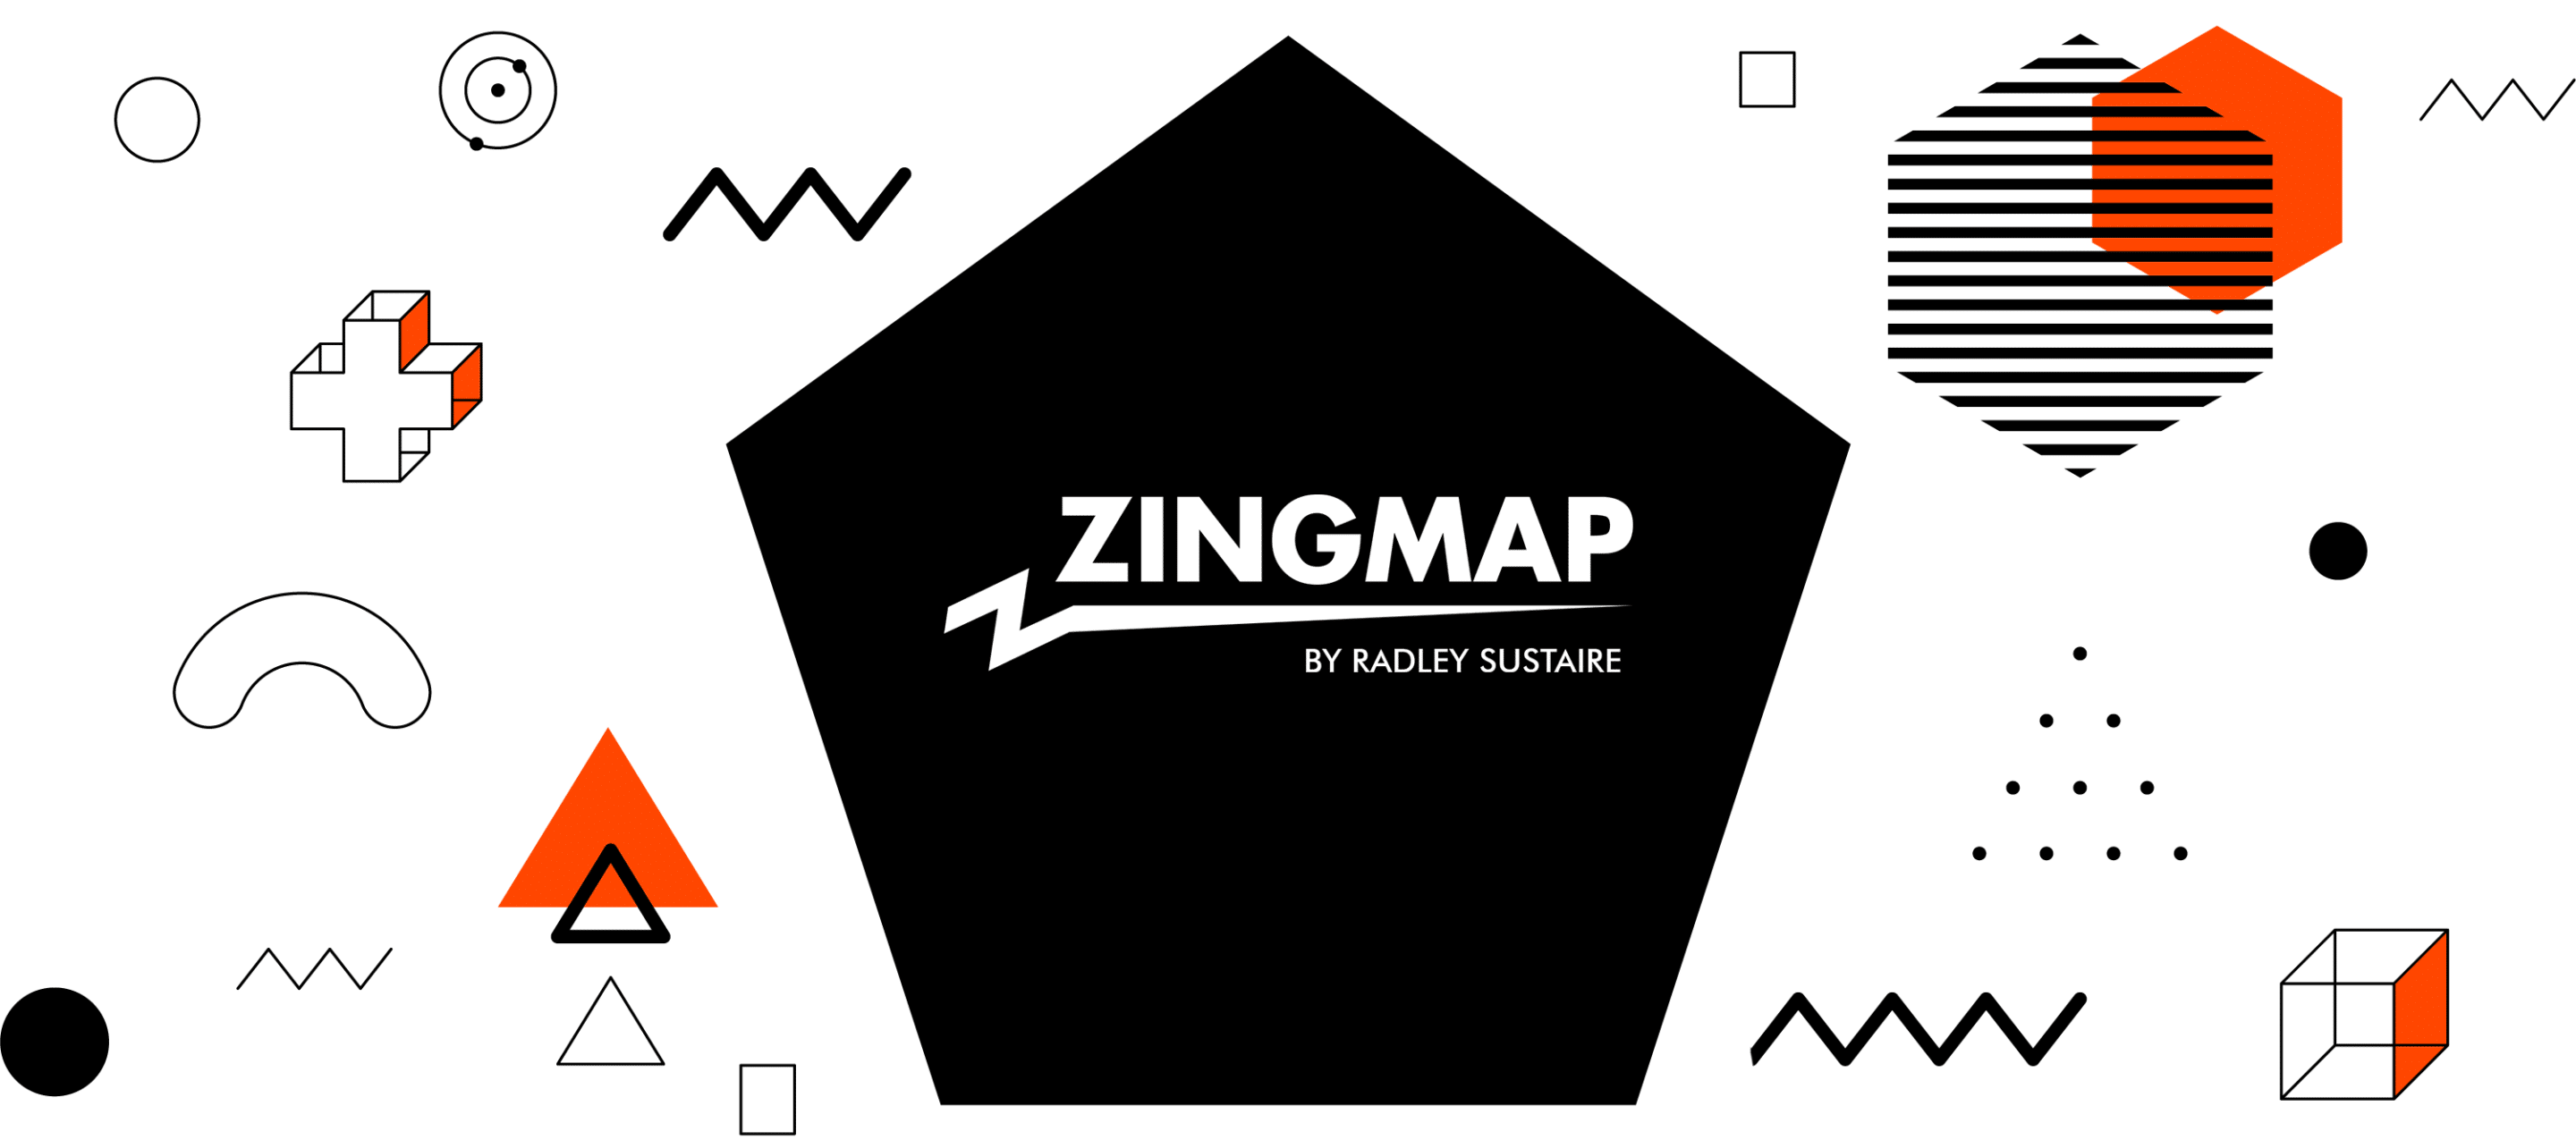 (c) Zingmap.com